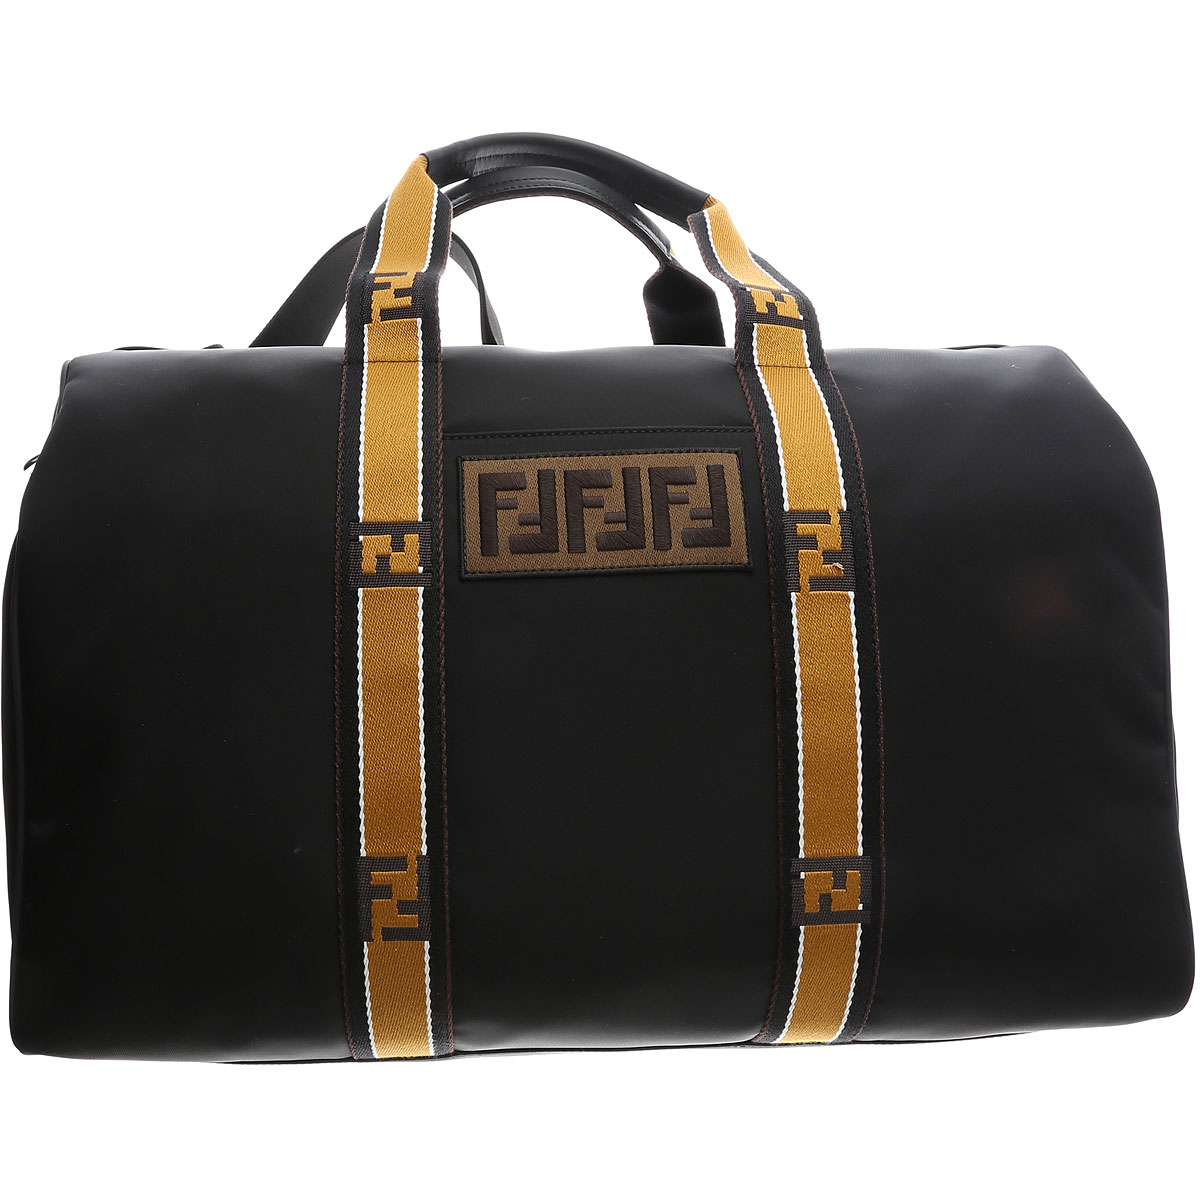 Handbags Fendi, Style code: 7va430-a1r4-f0gxn